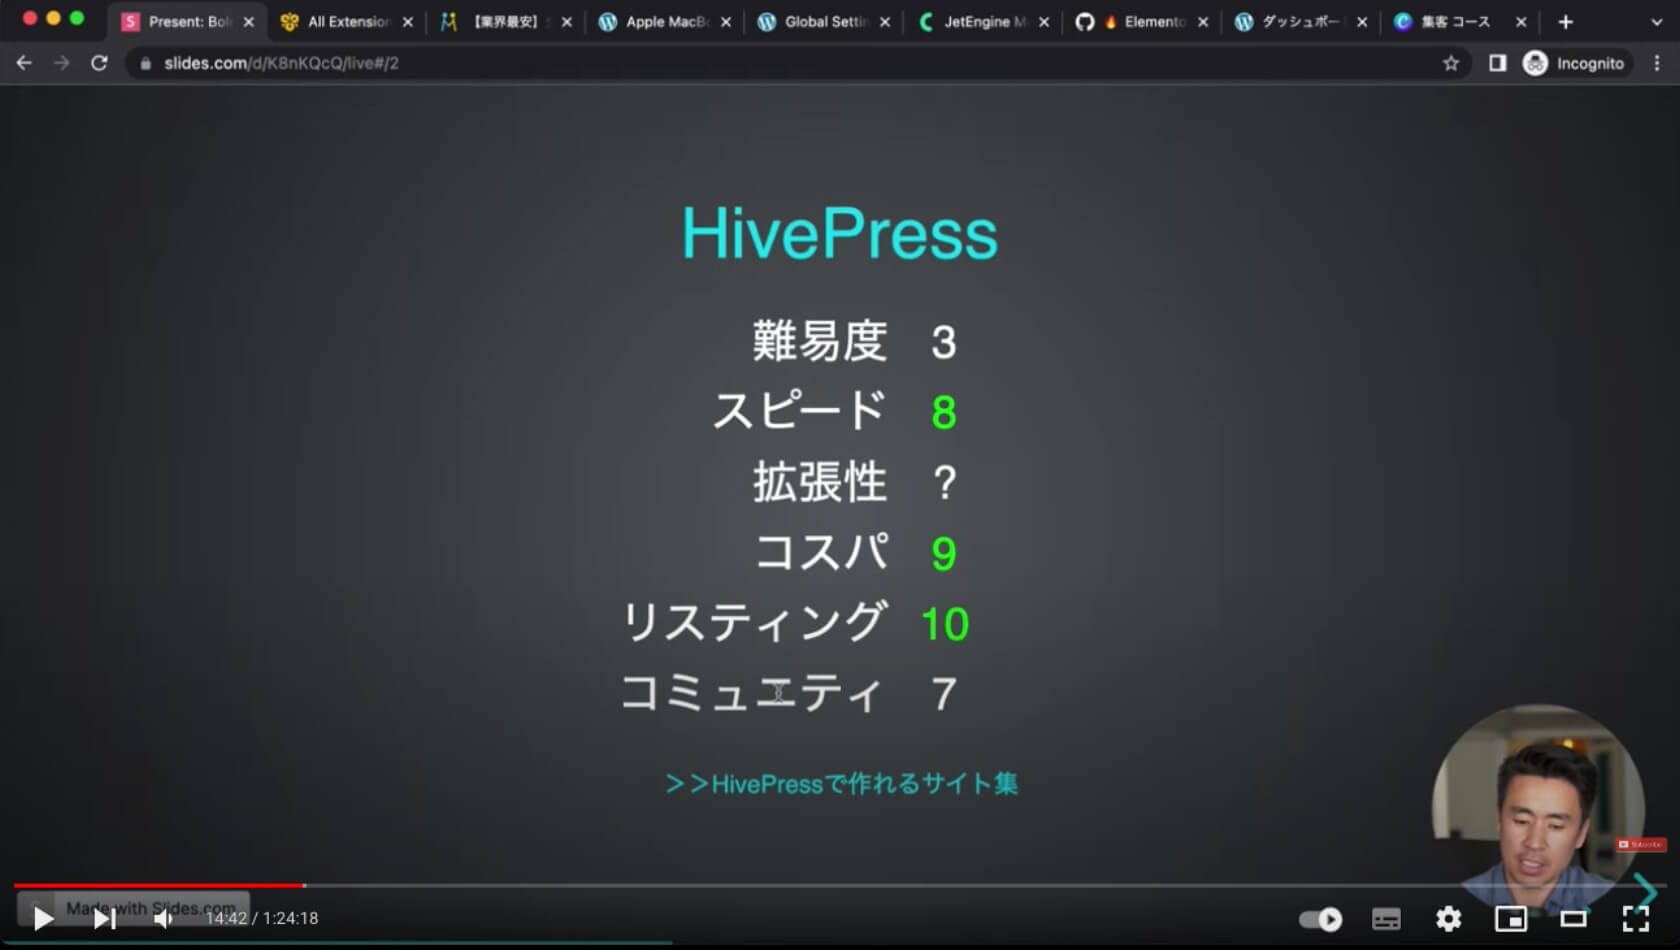 HivePressの難易度やコスパなどについて解説